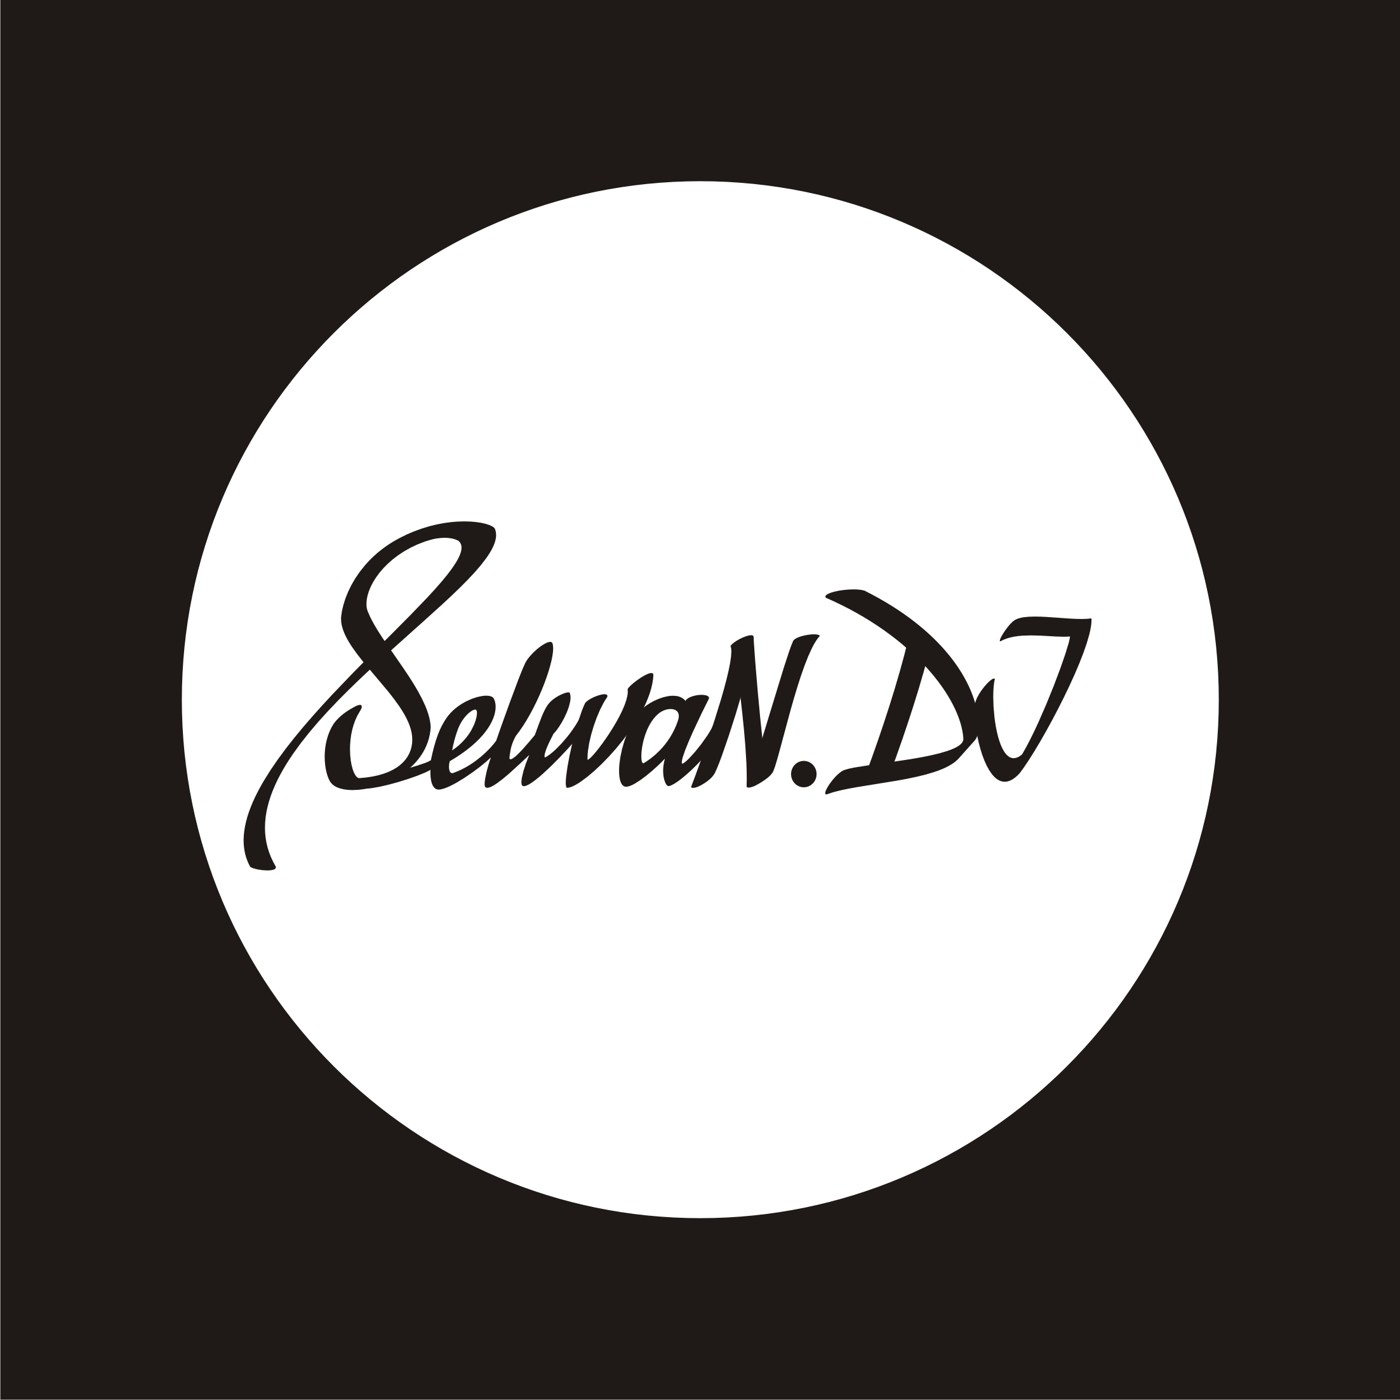 SelivaN.DJ